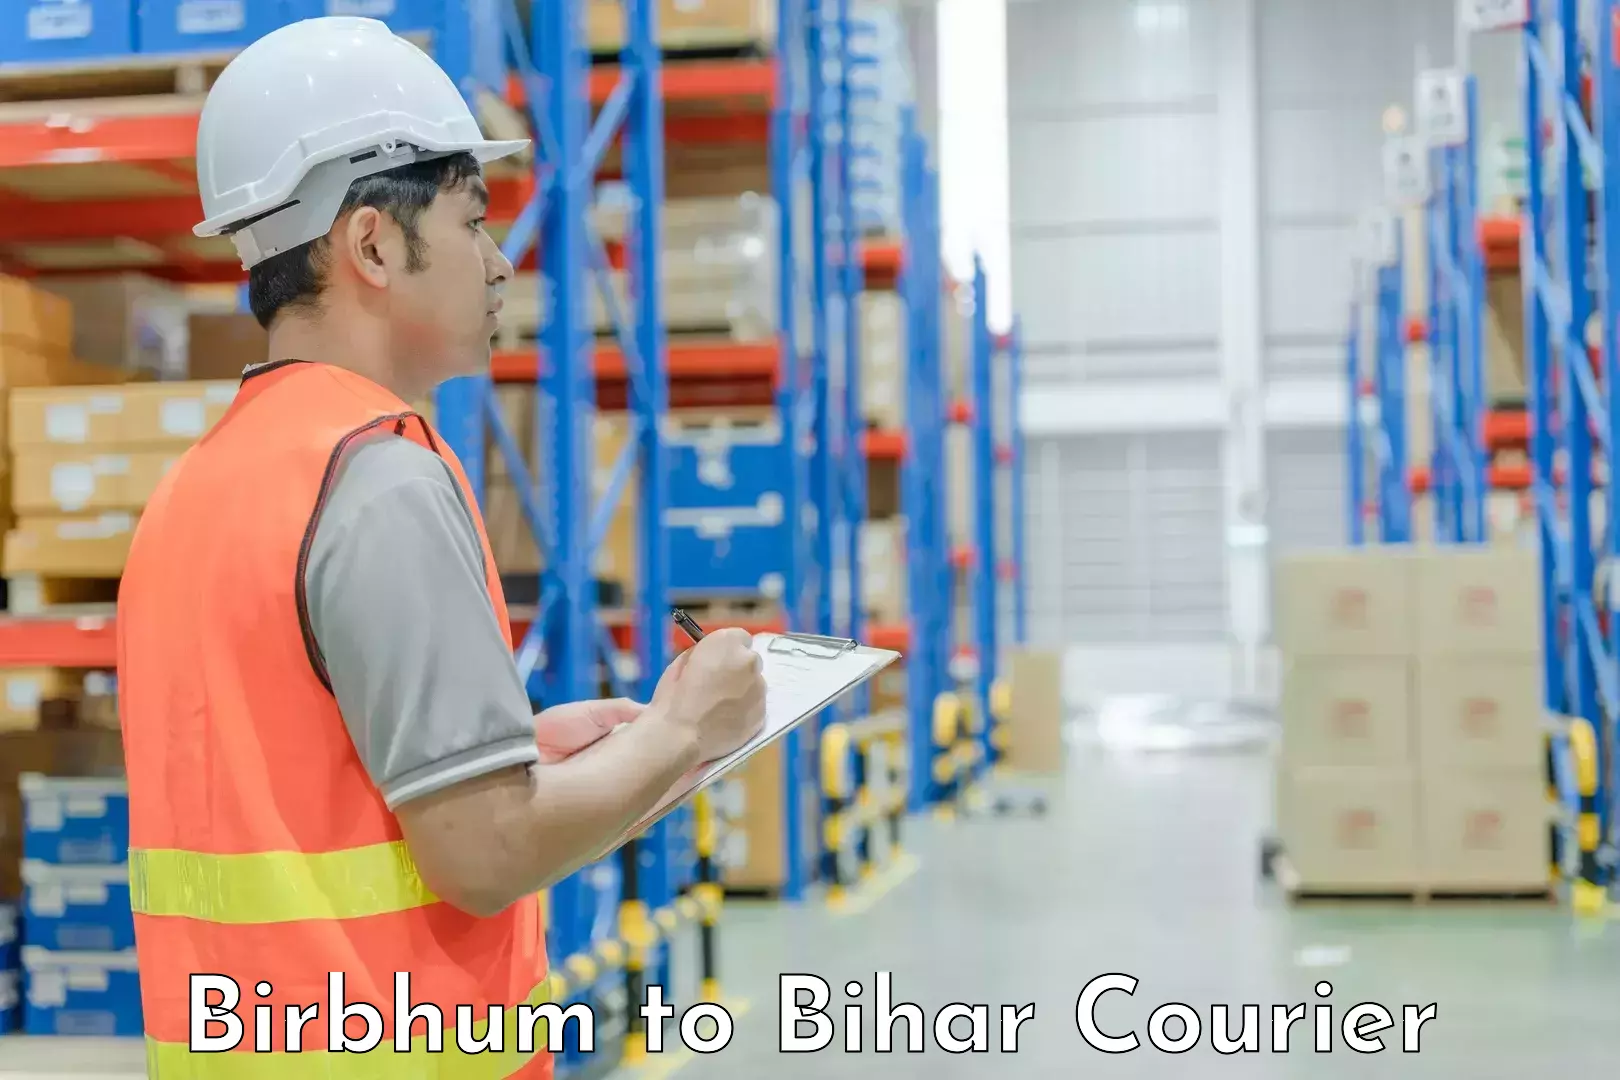 Trusted moving company Birbhum to Bihar